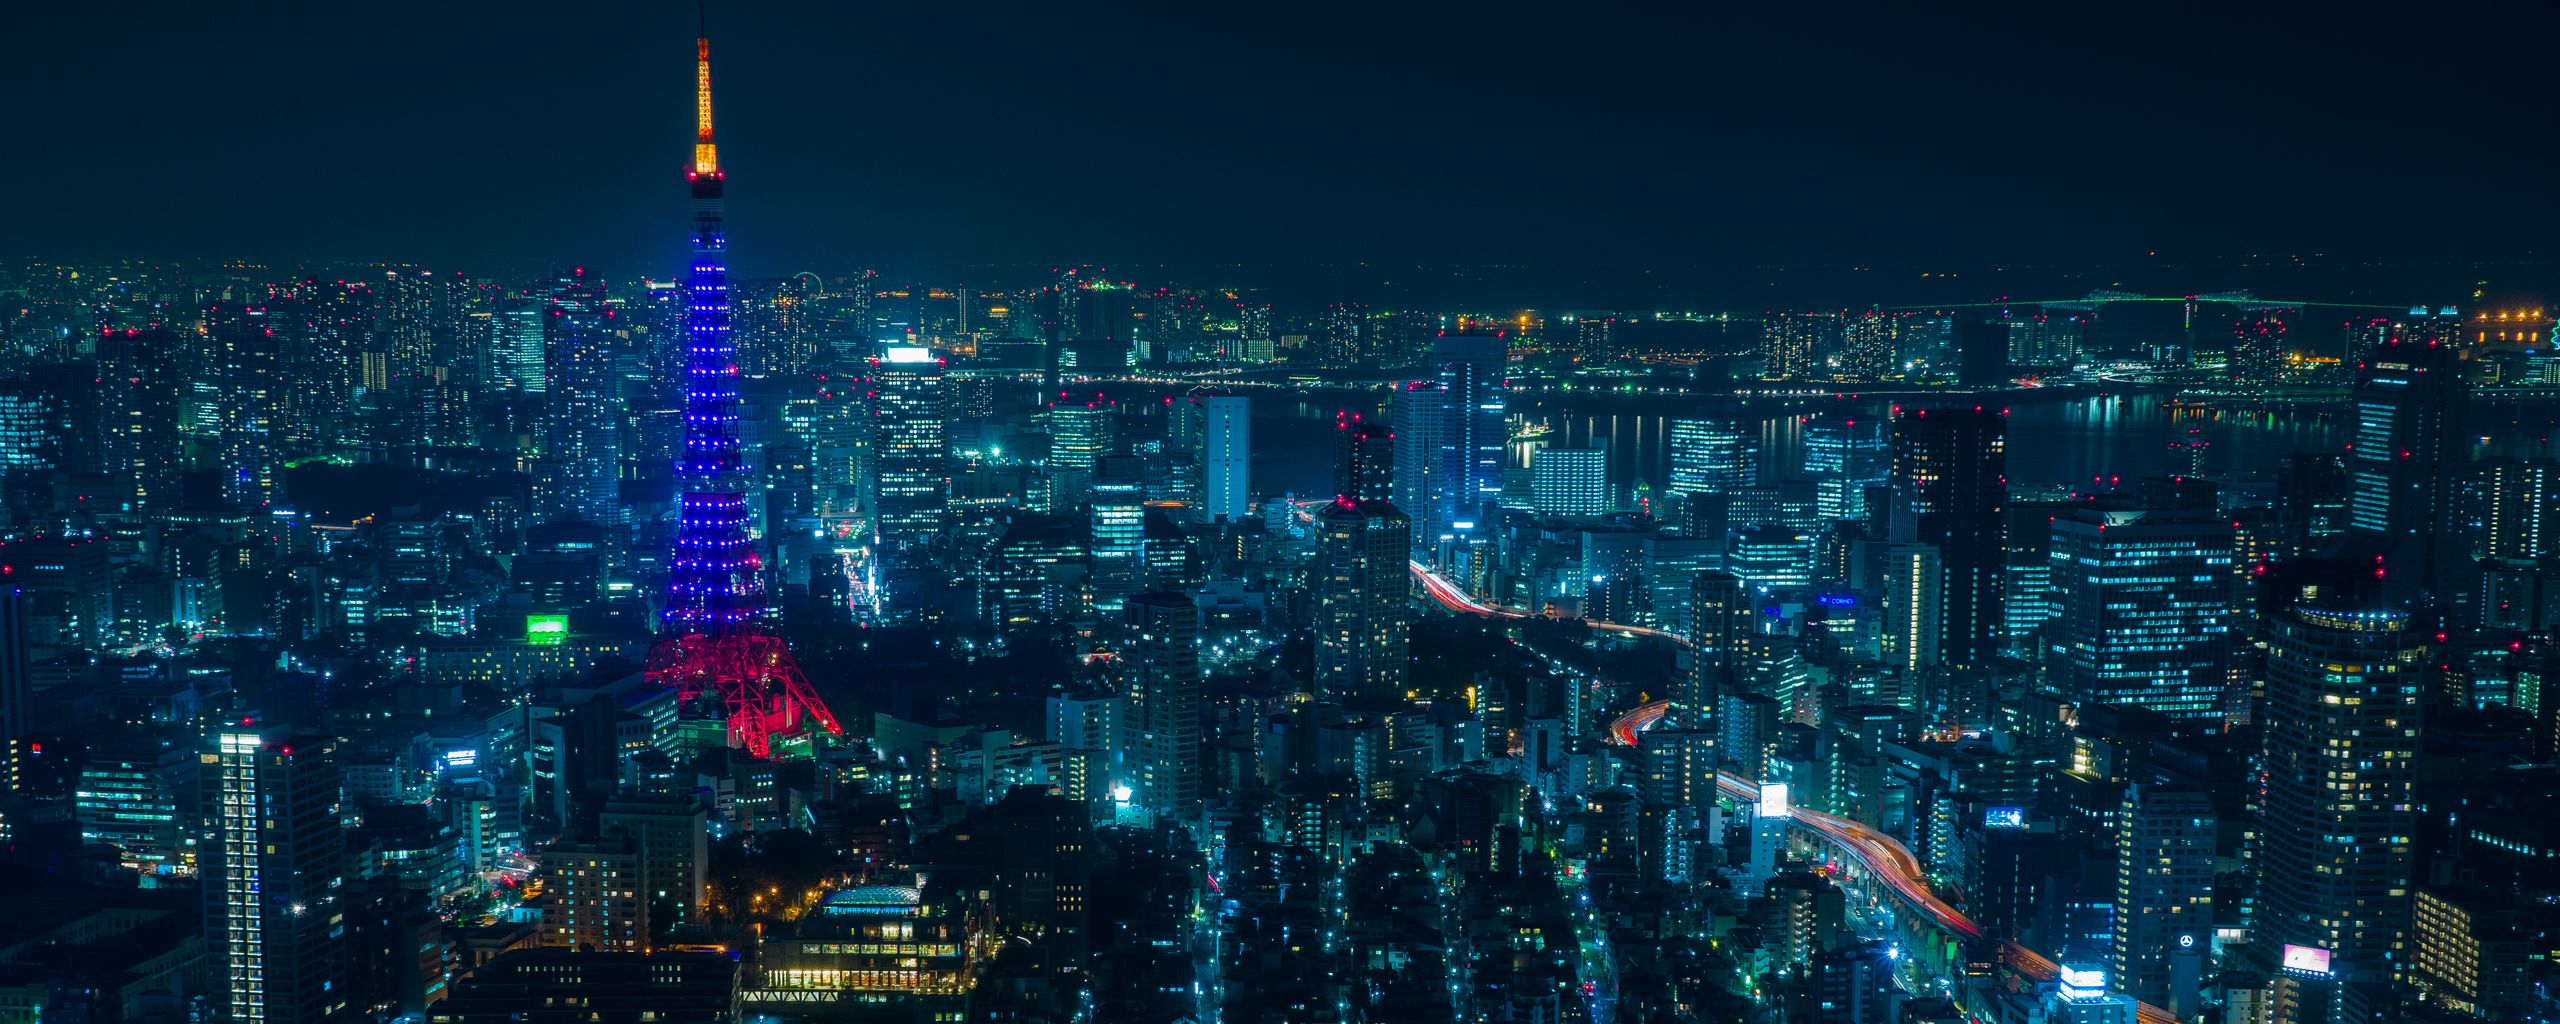 Download wallpaper 2560x1024 tokyo, night city, skyscrapers ultrawide